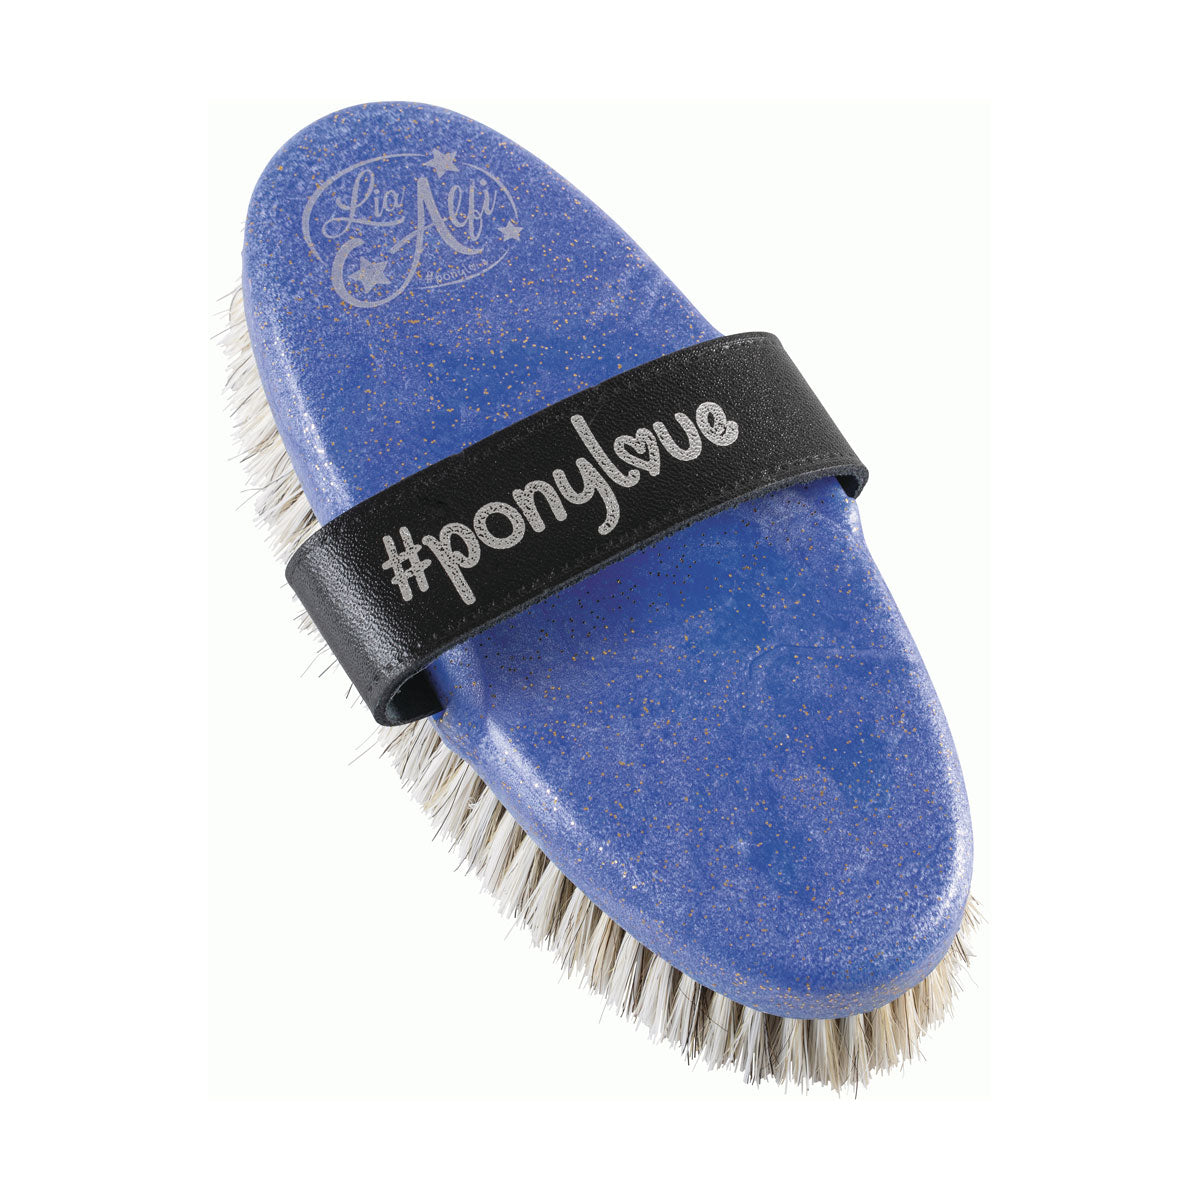 Haas Ponylove Fellglanz Brush - Blue Glitter